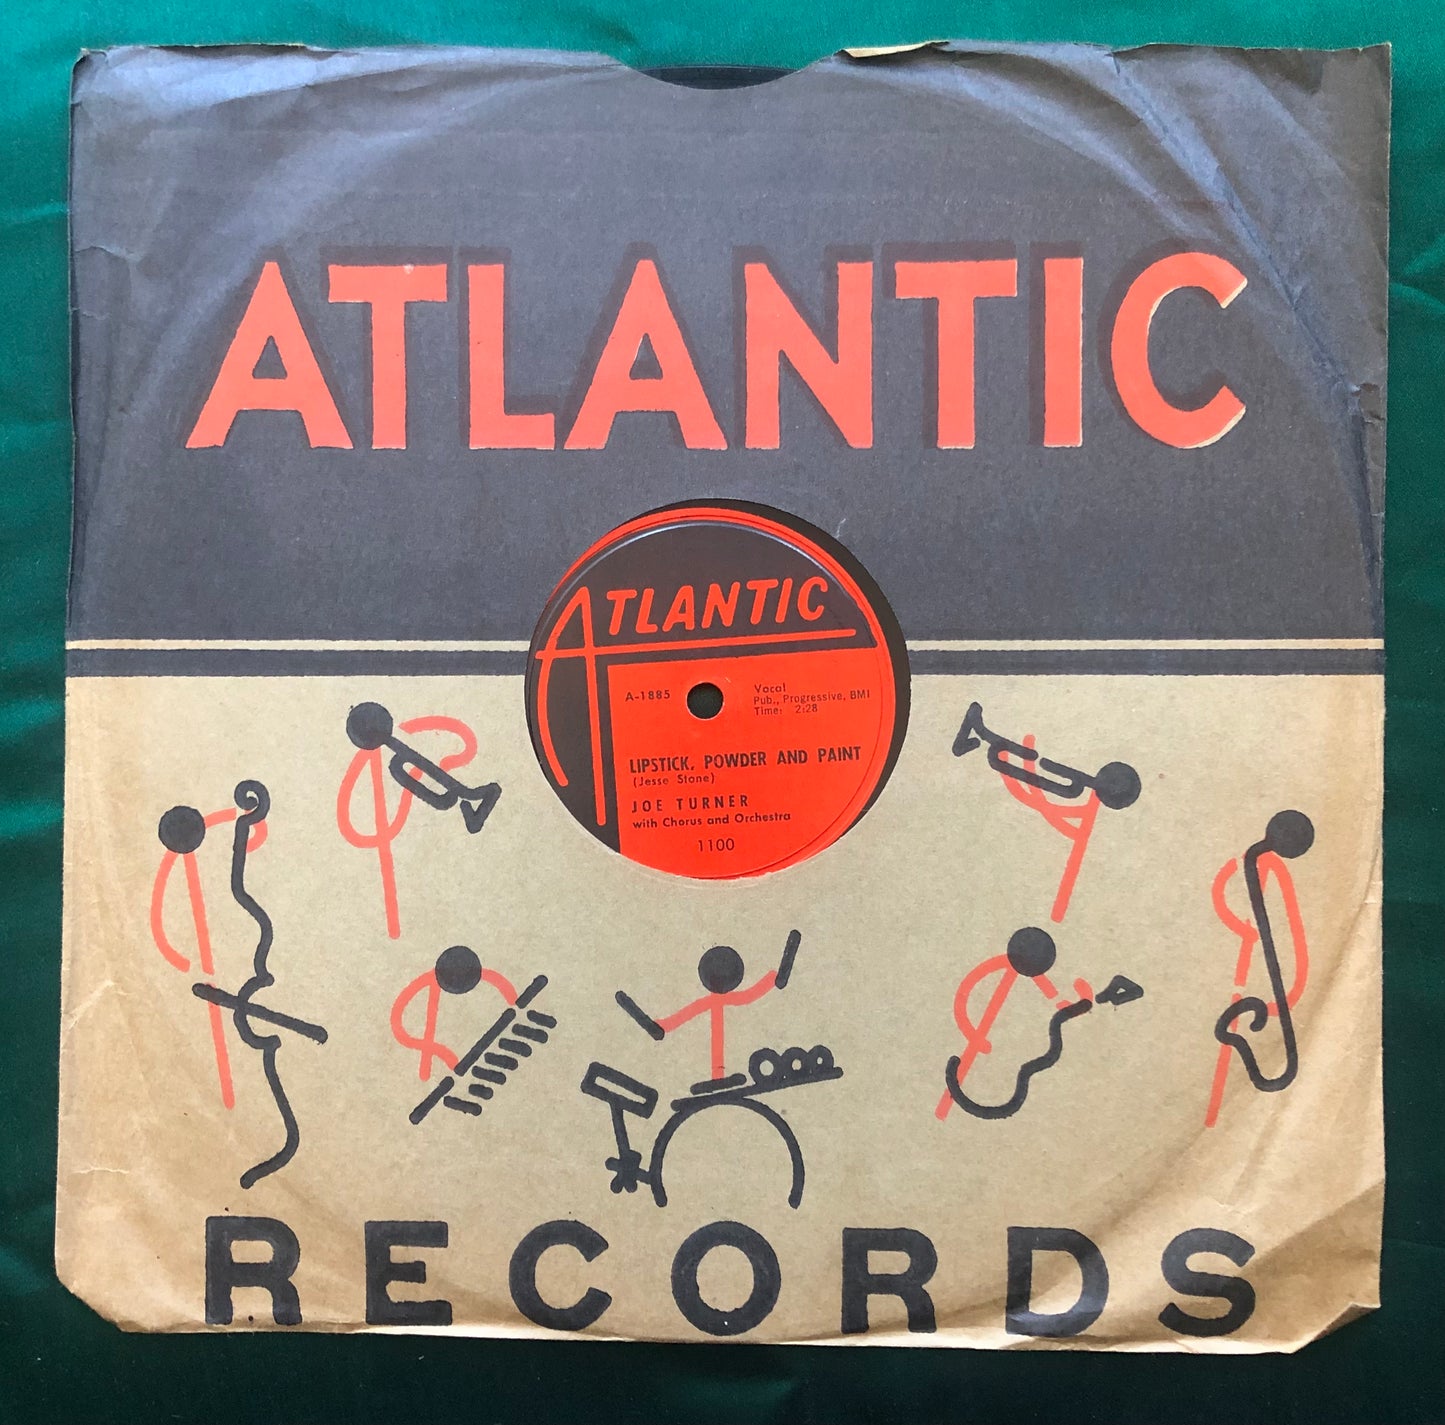 Joe Turner Lipstick, Powder And Paint / Rock A While Atlantic R&B 78 1956